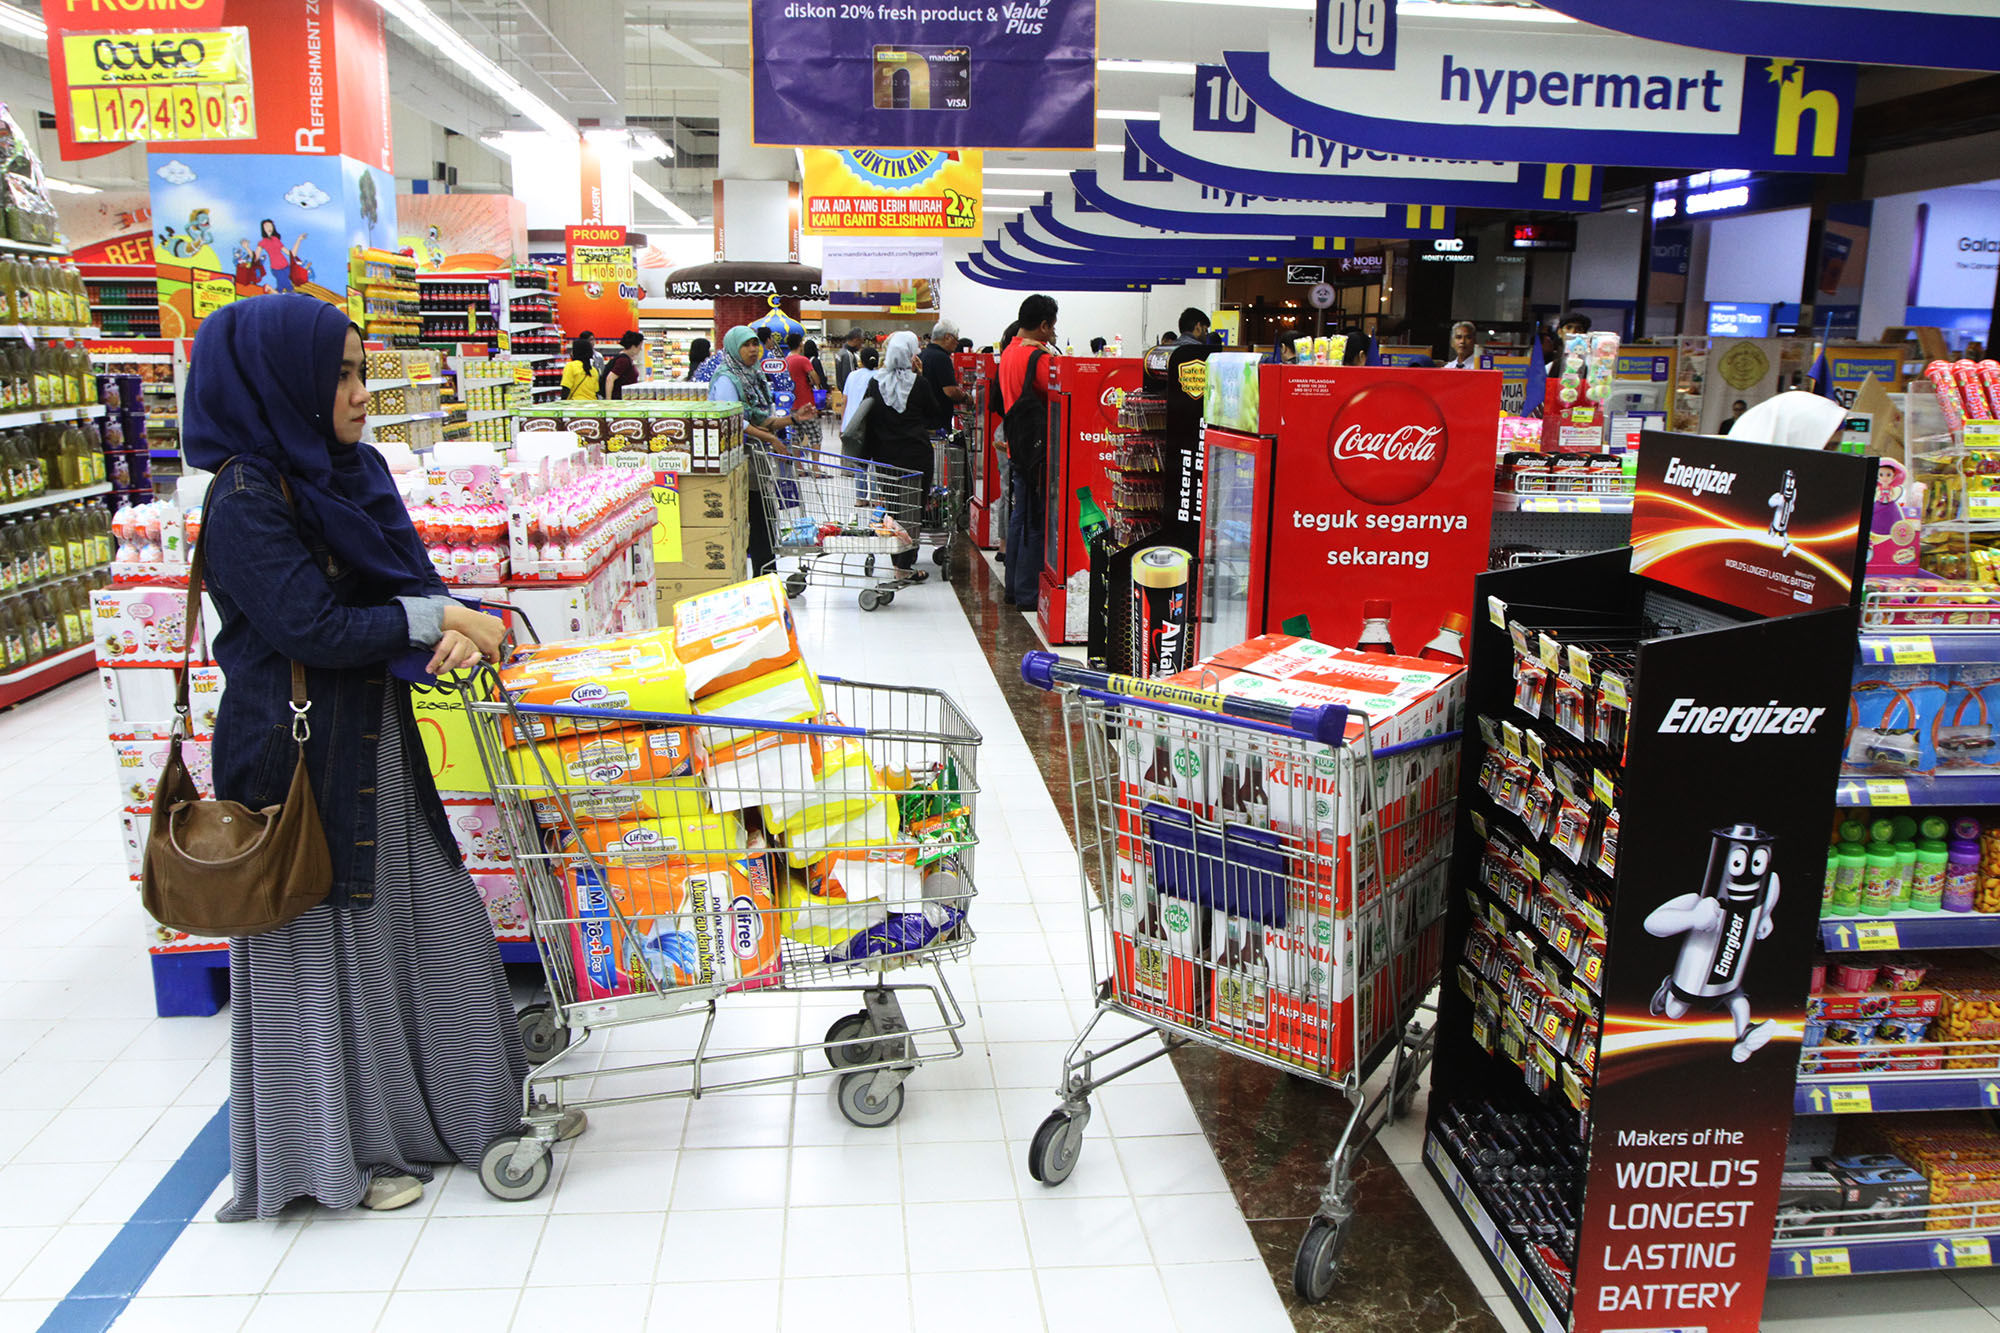 <p>Suasana warga berbelanja di salah satu supermarket di kawasan Kemang, Jakarta. Foto: Ismail Pohan/TrenAsia</p>
